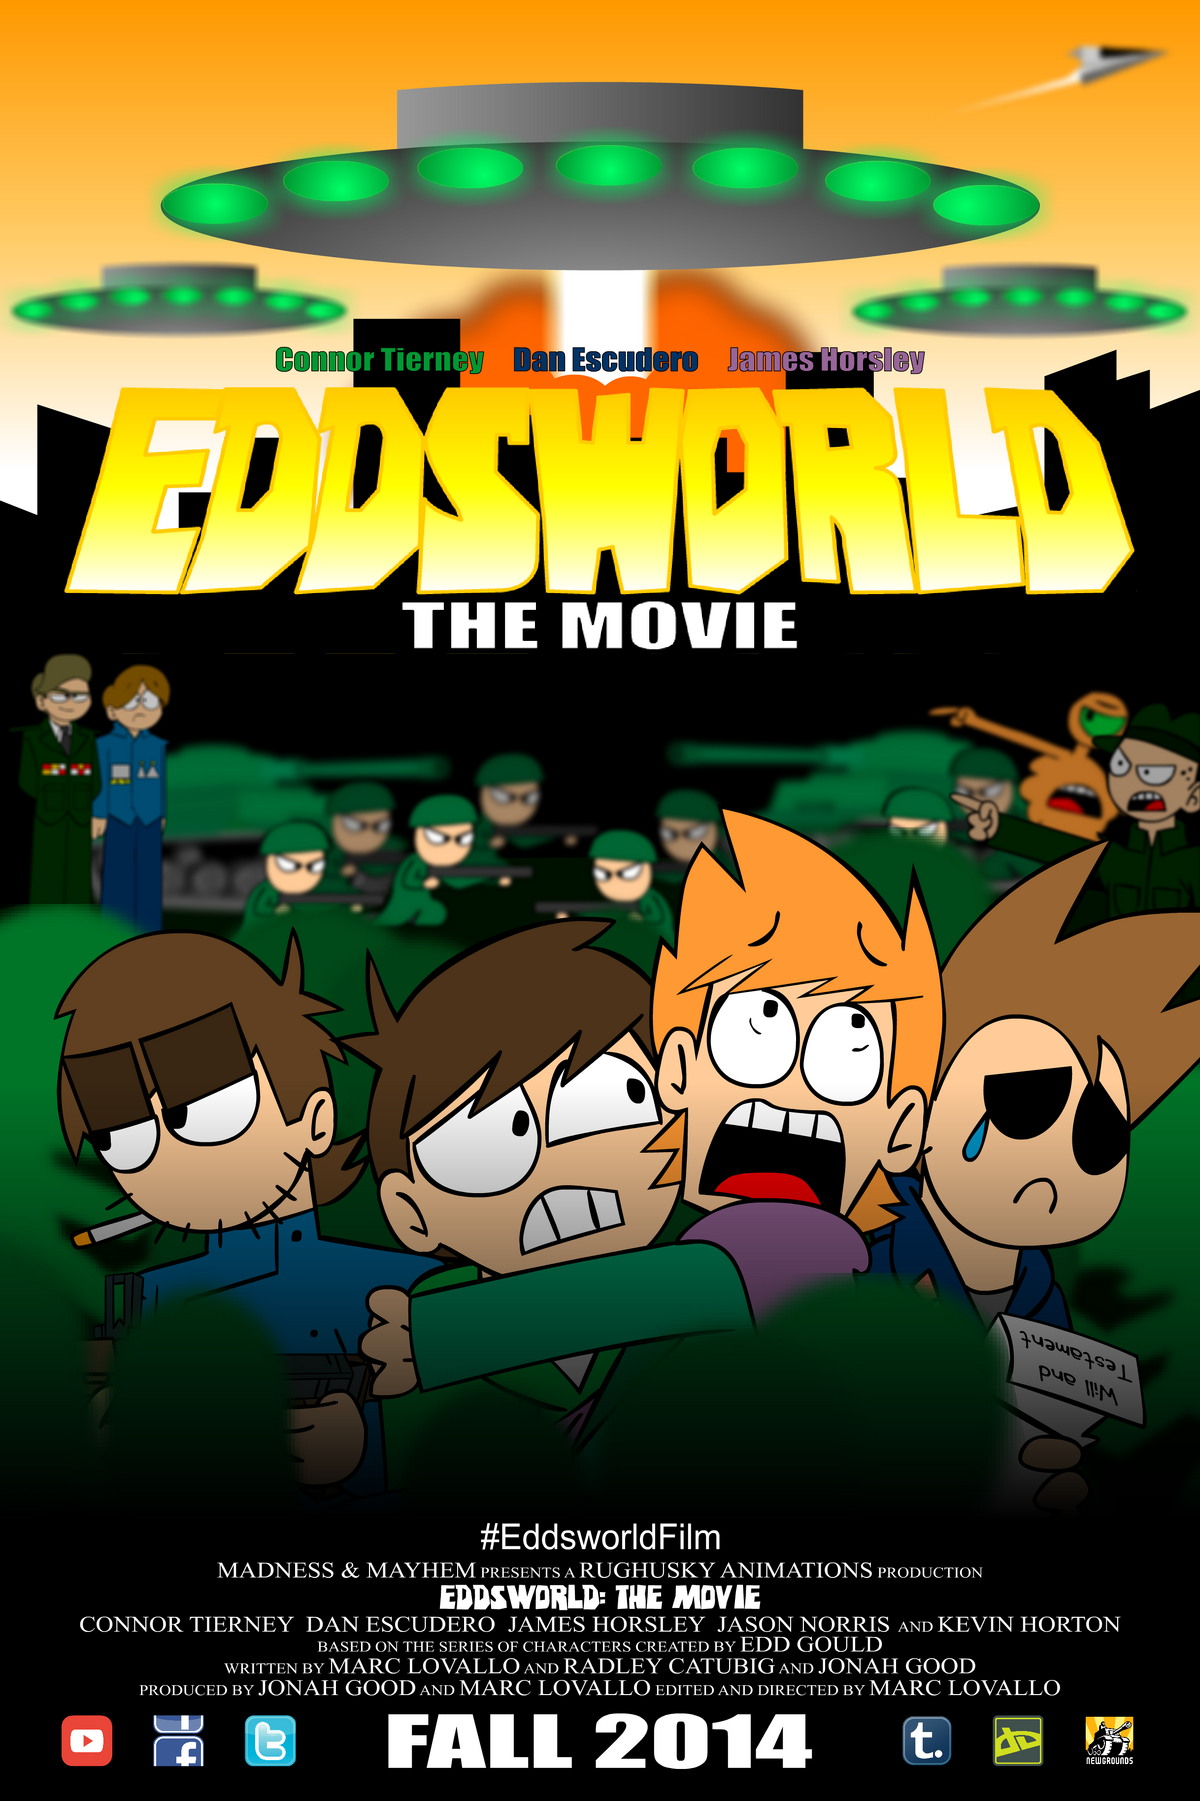 Eddsworld - King Matt Poster